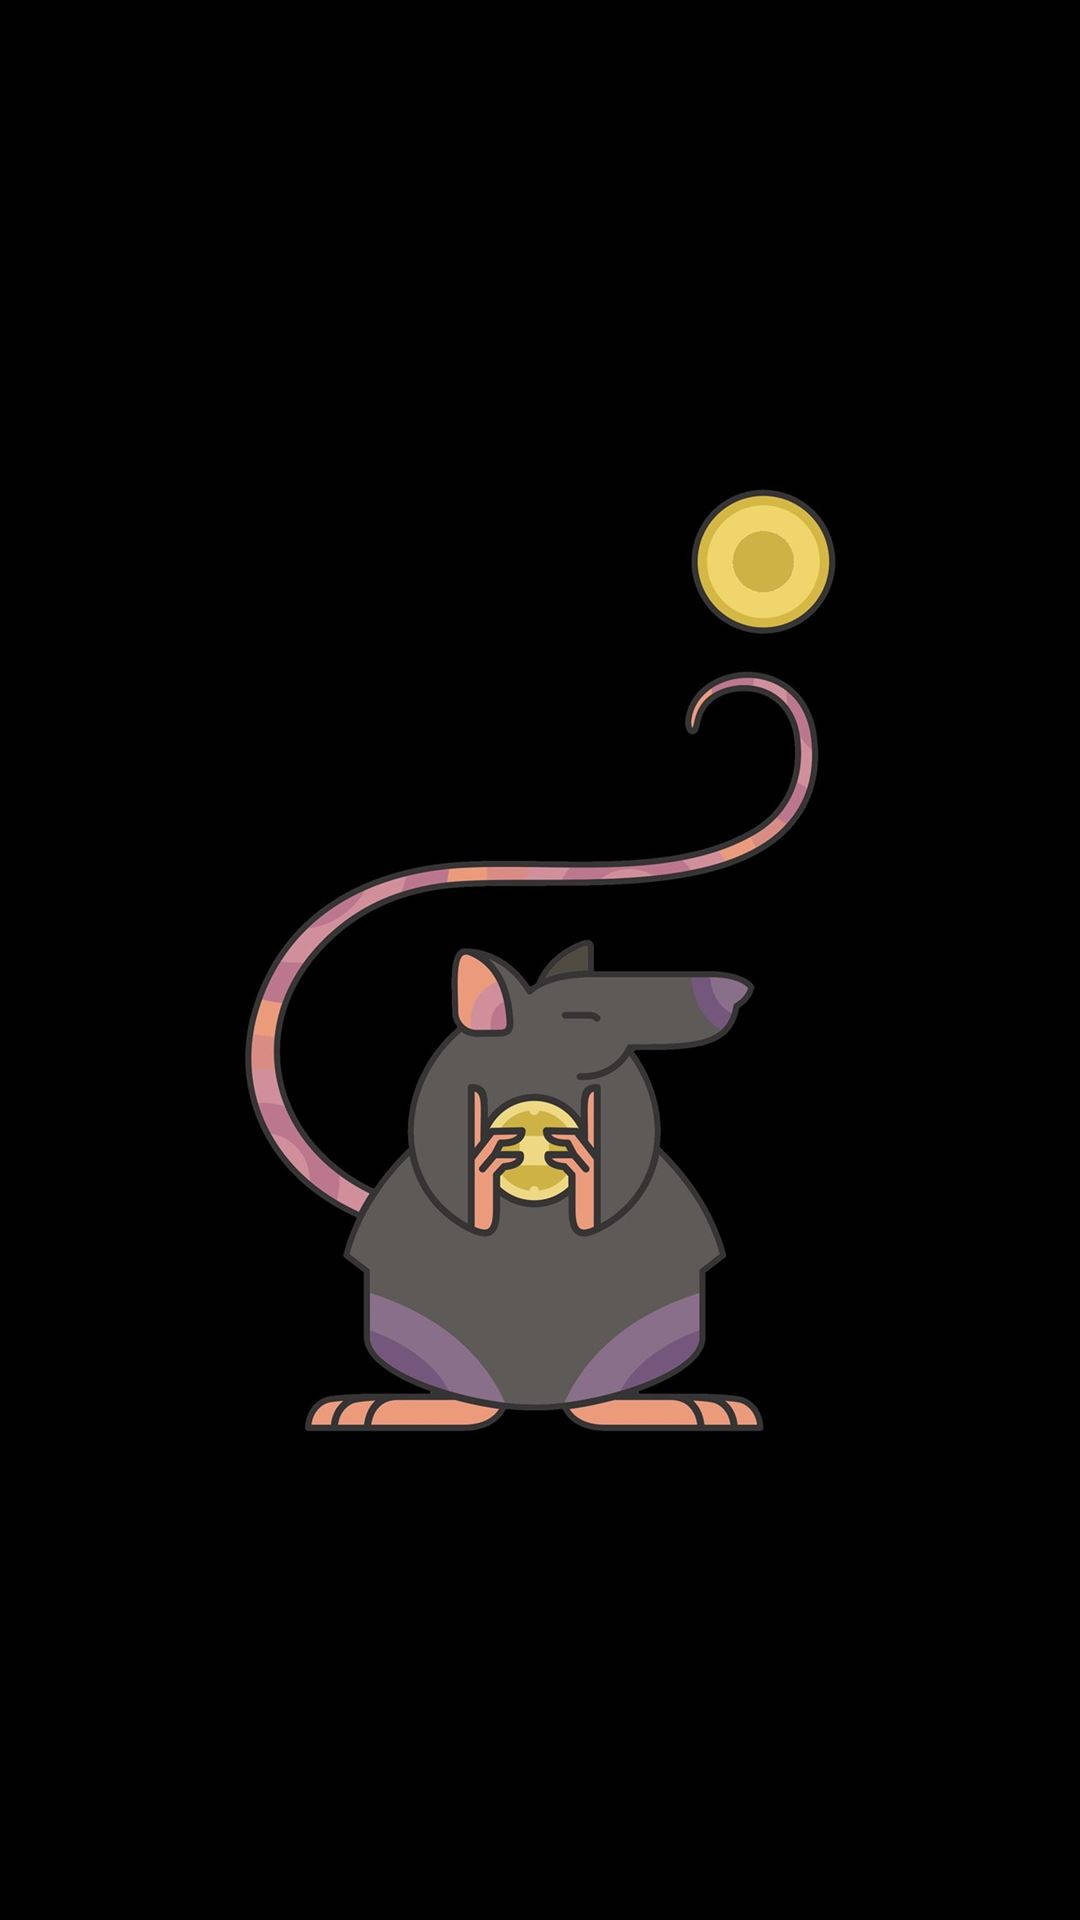 Rat Holding Gold Coin Wallpaper